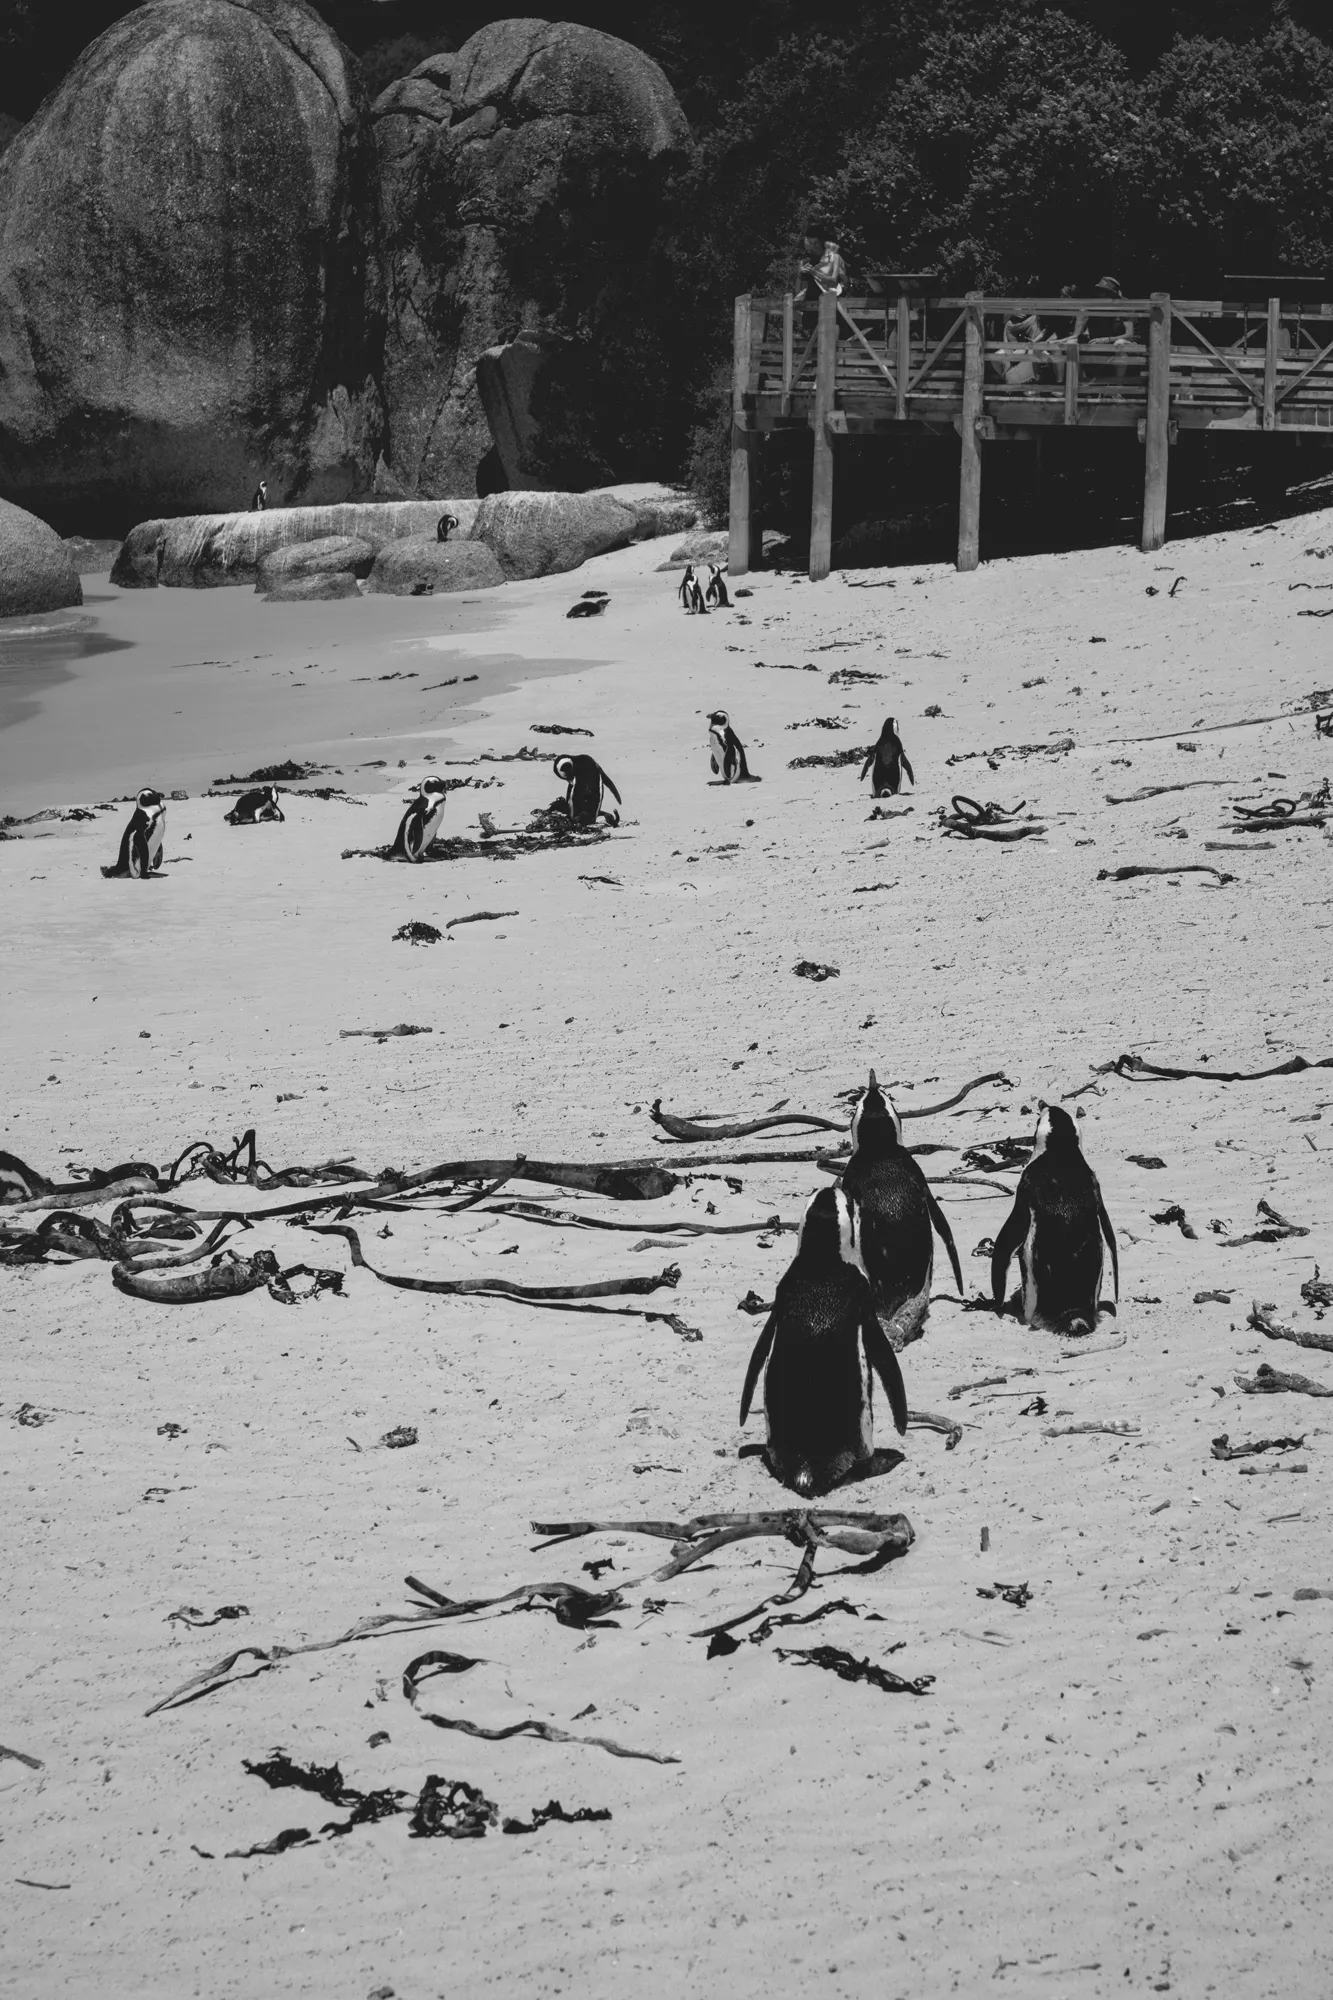 2022-02-14 - Cape Town - Penguins on beach